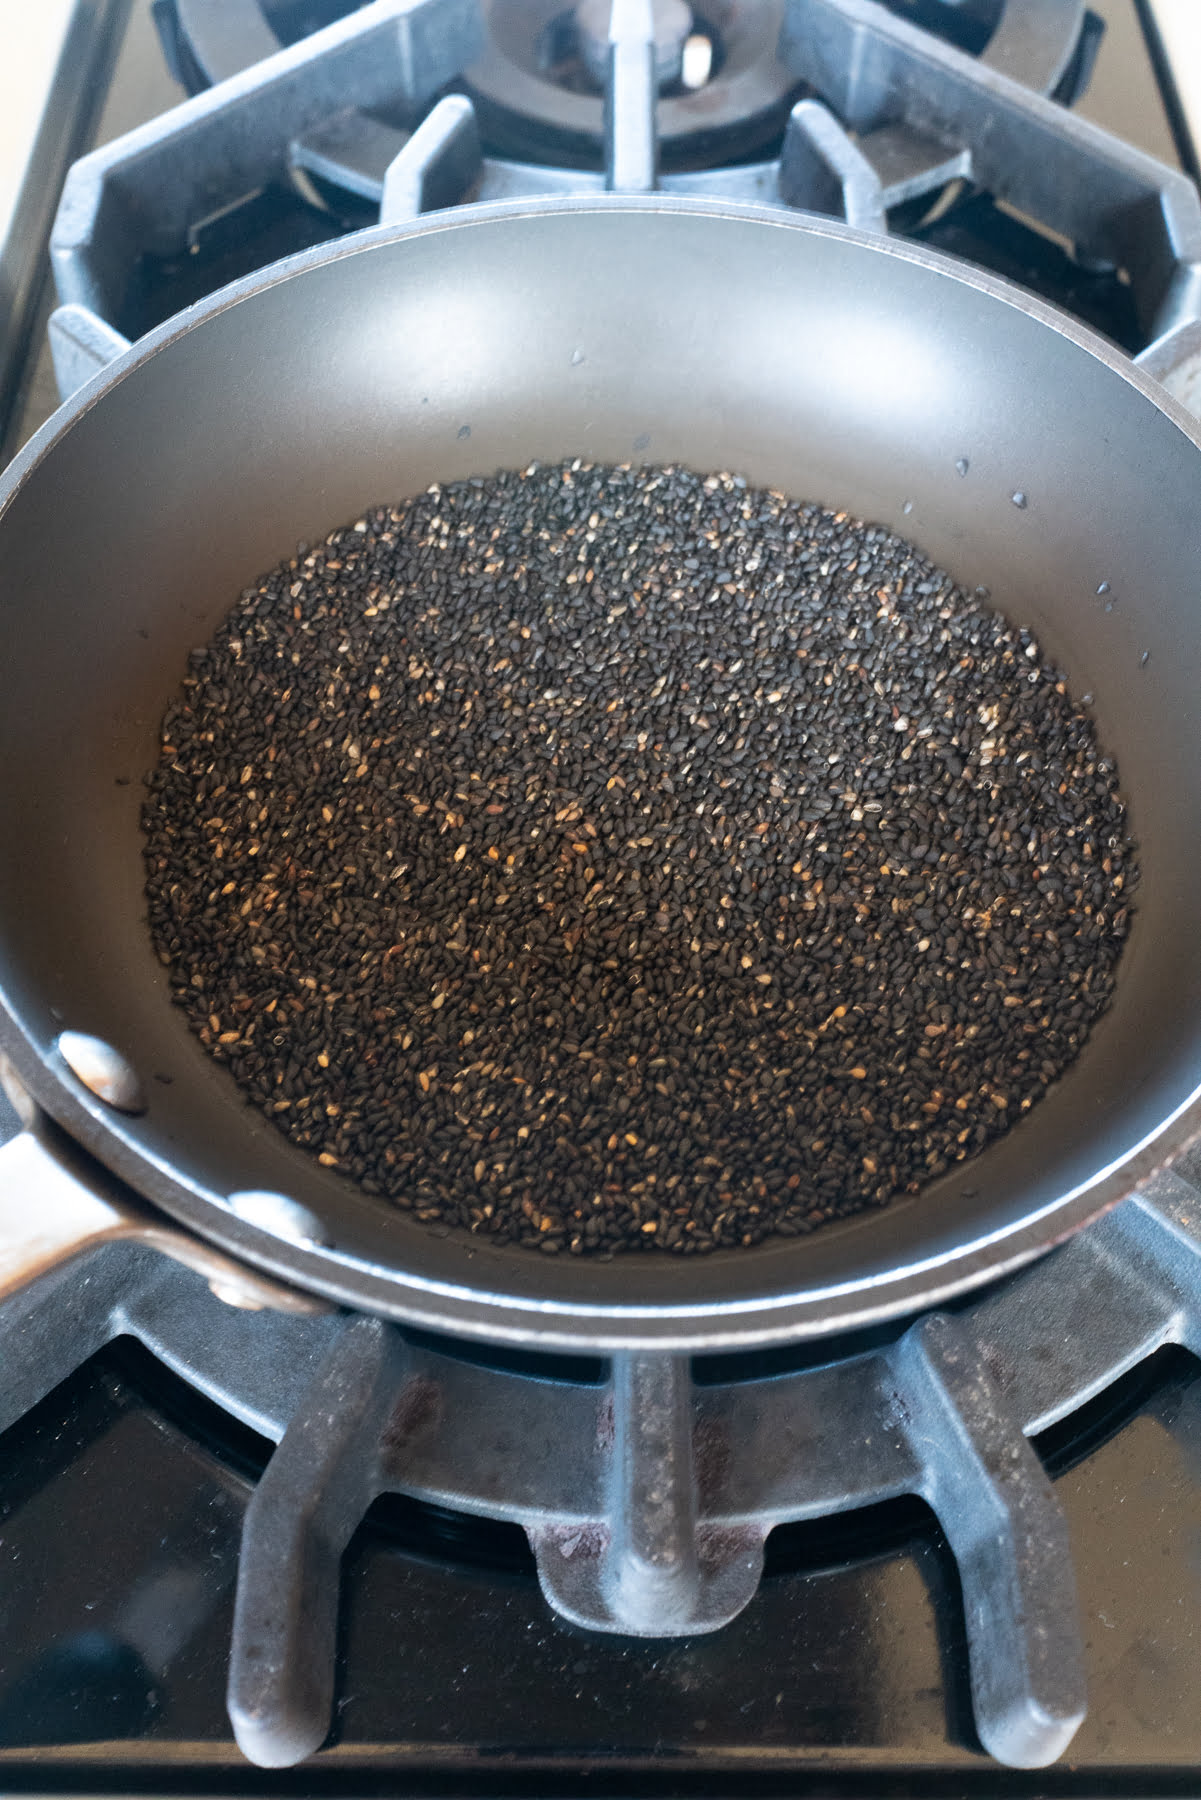 Toasting the roasted black sesame seeds on the sove.